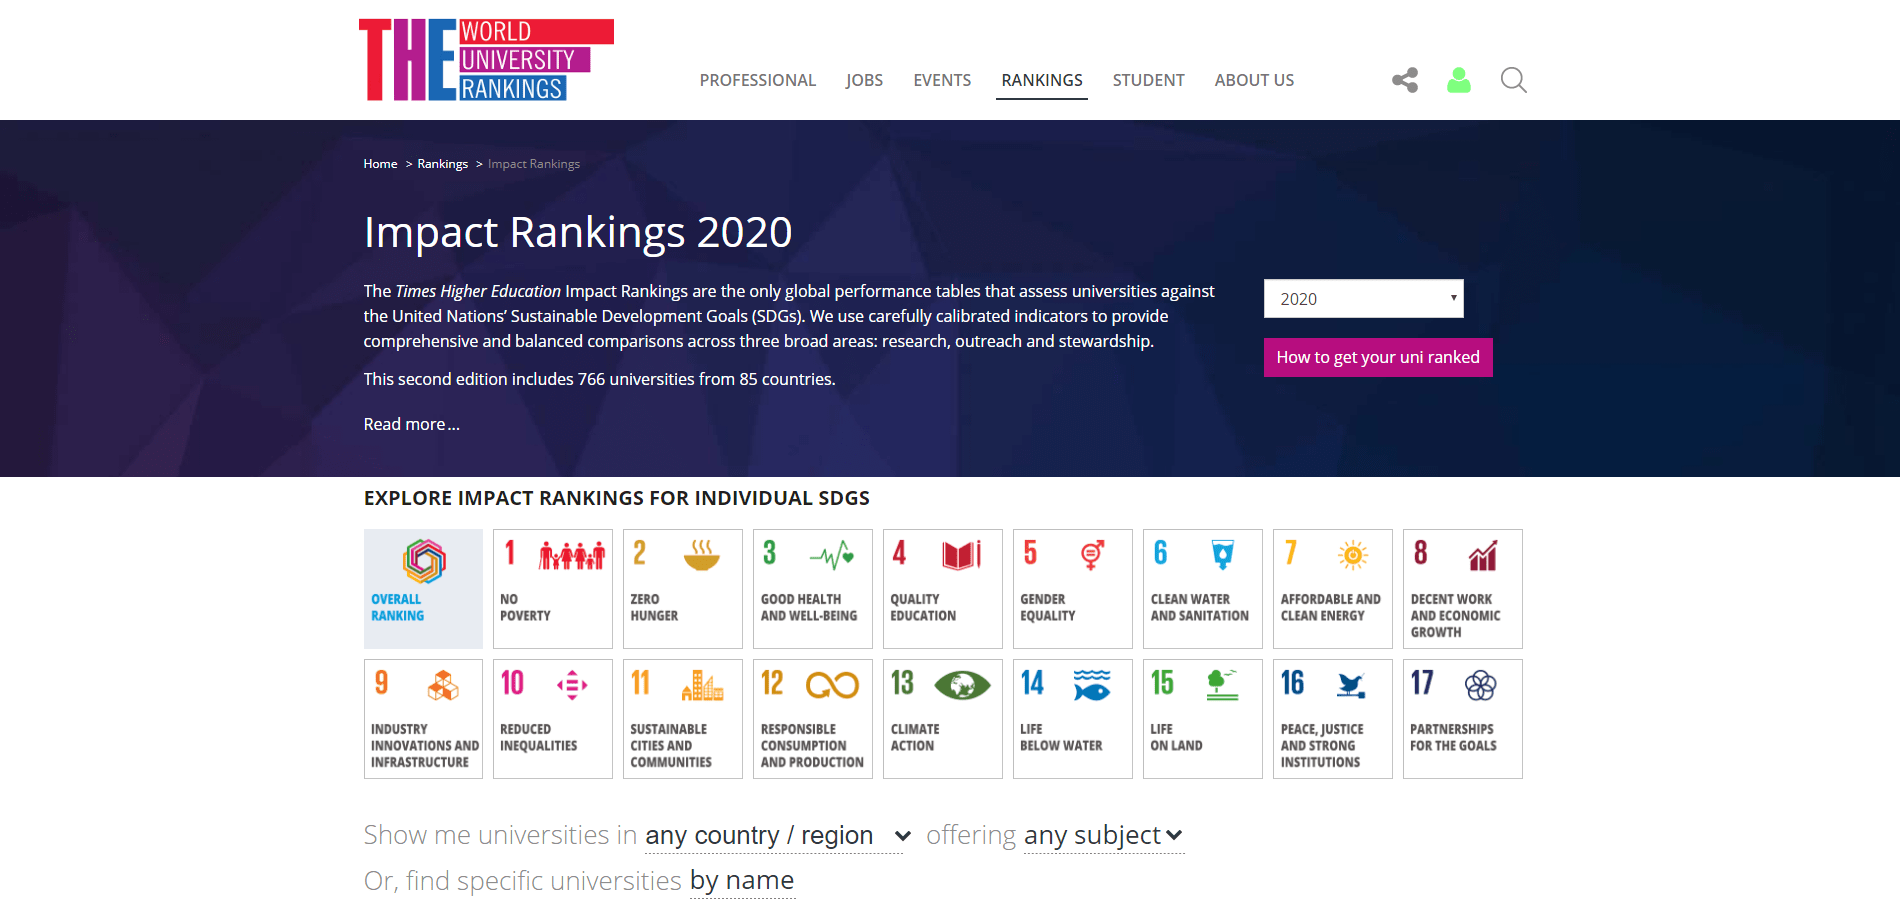 The 2020 Impact Rankings